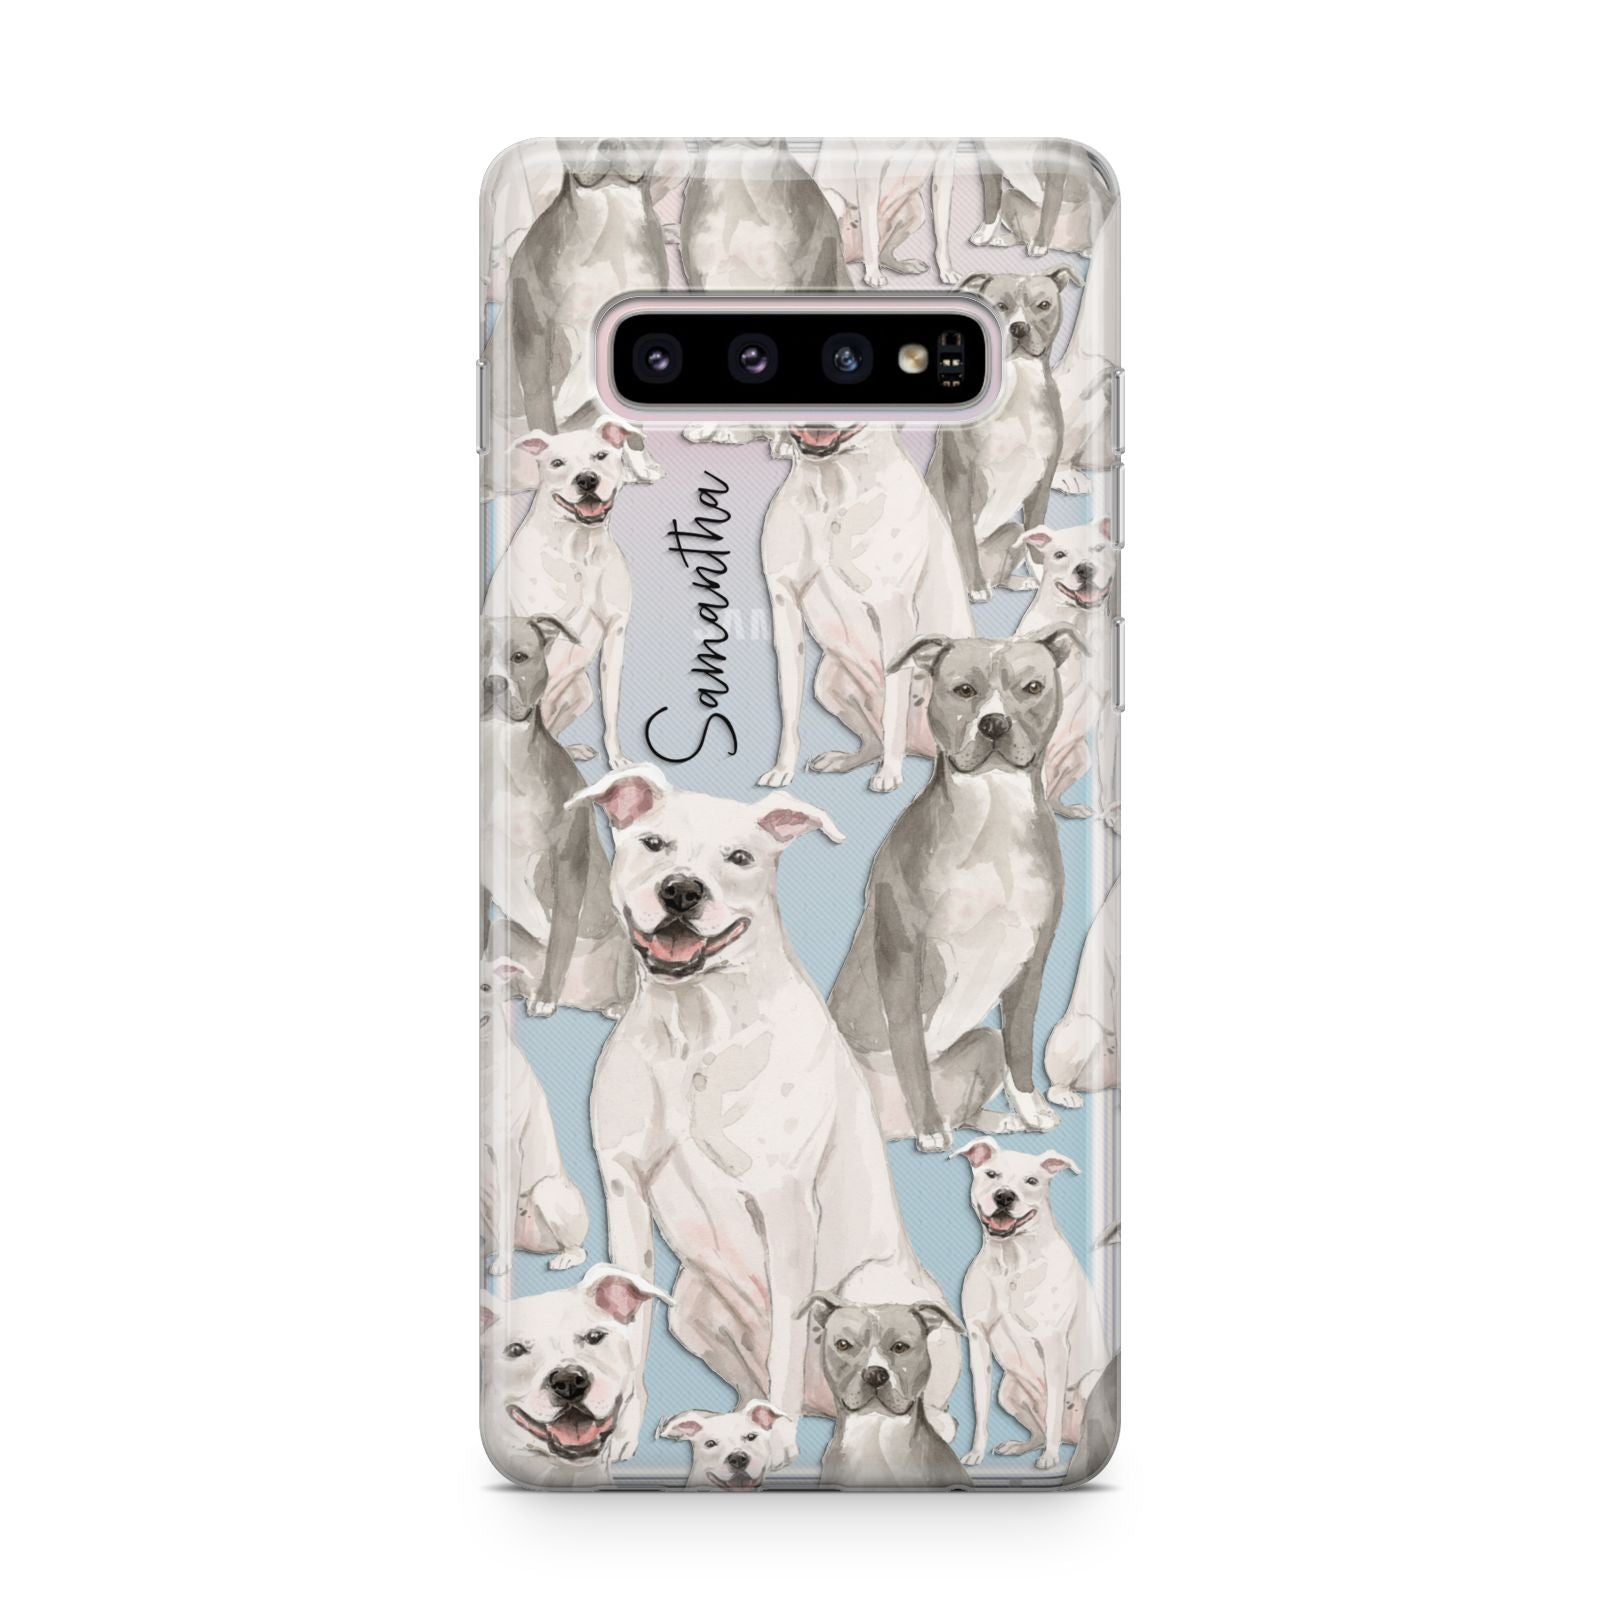 Personalised Staffordshire Dog Samsung Galaxy S10 Plus Case